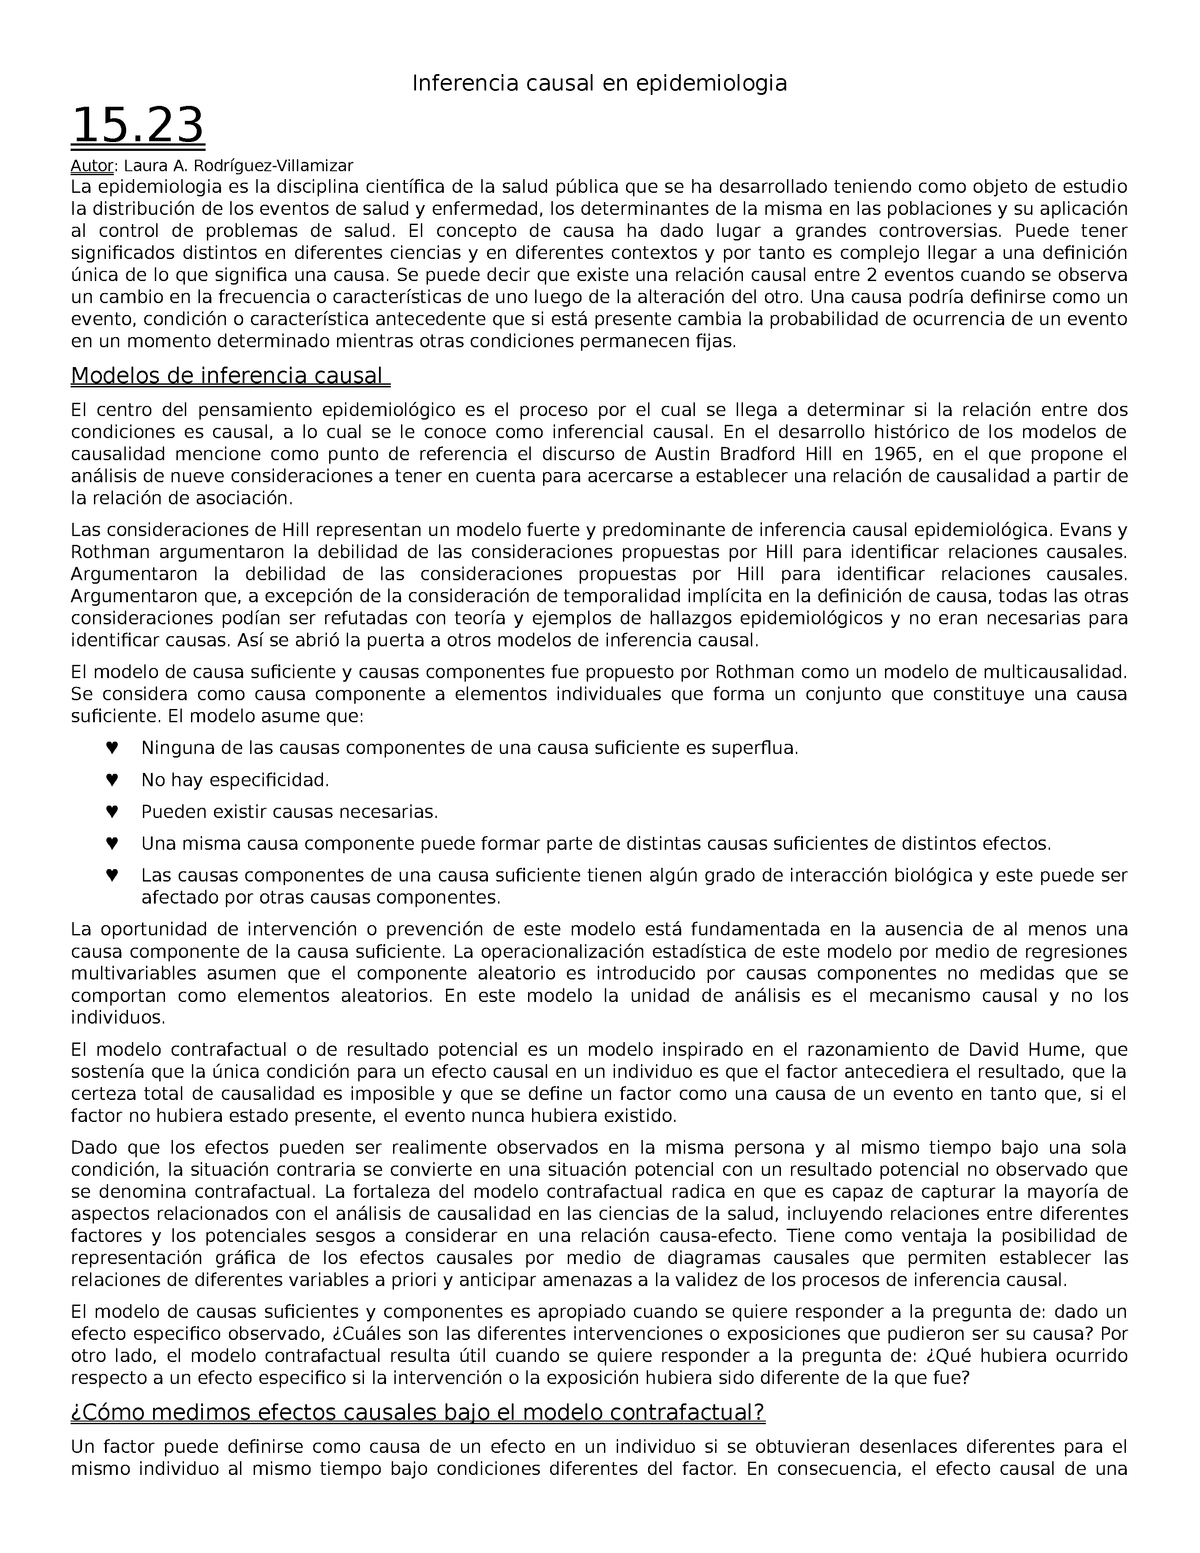 Inferencial causal en epidemiologia - Laura A. Rodriguez-Villamizar -  Inferencia causal en - Studocu